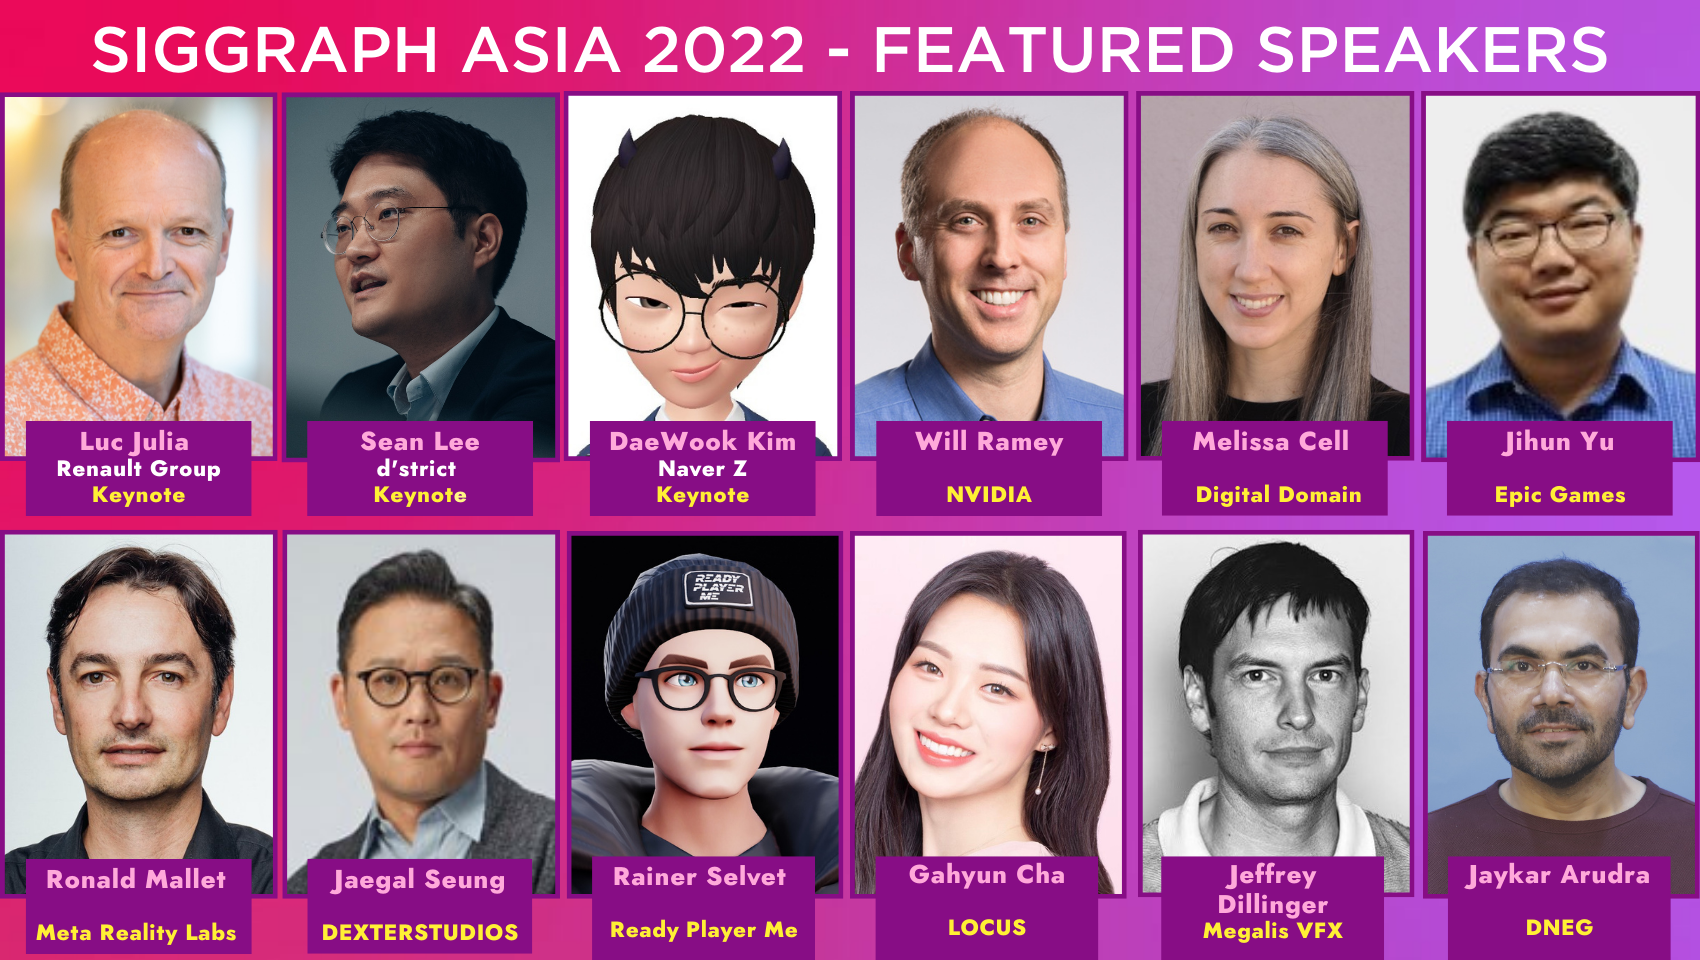 Key Speakers Announced for SIGGRAPH Asia 2022 Daegu